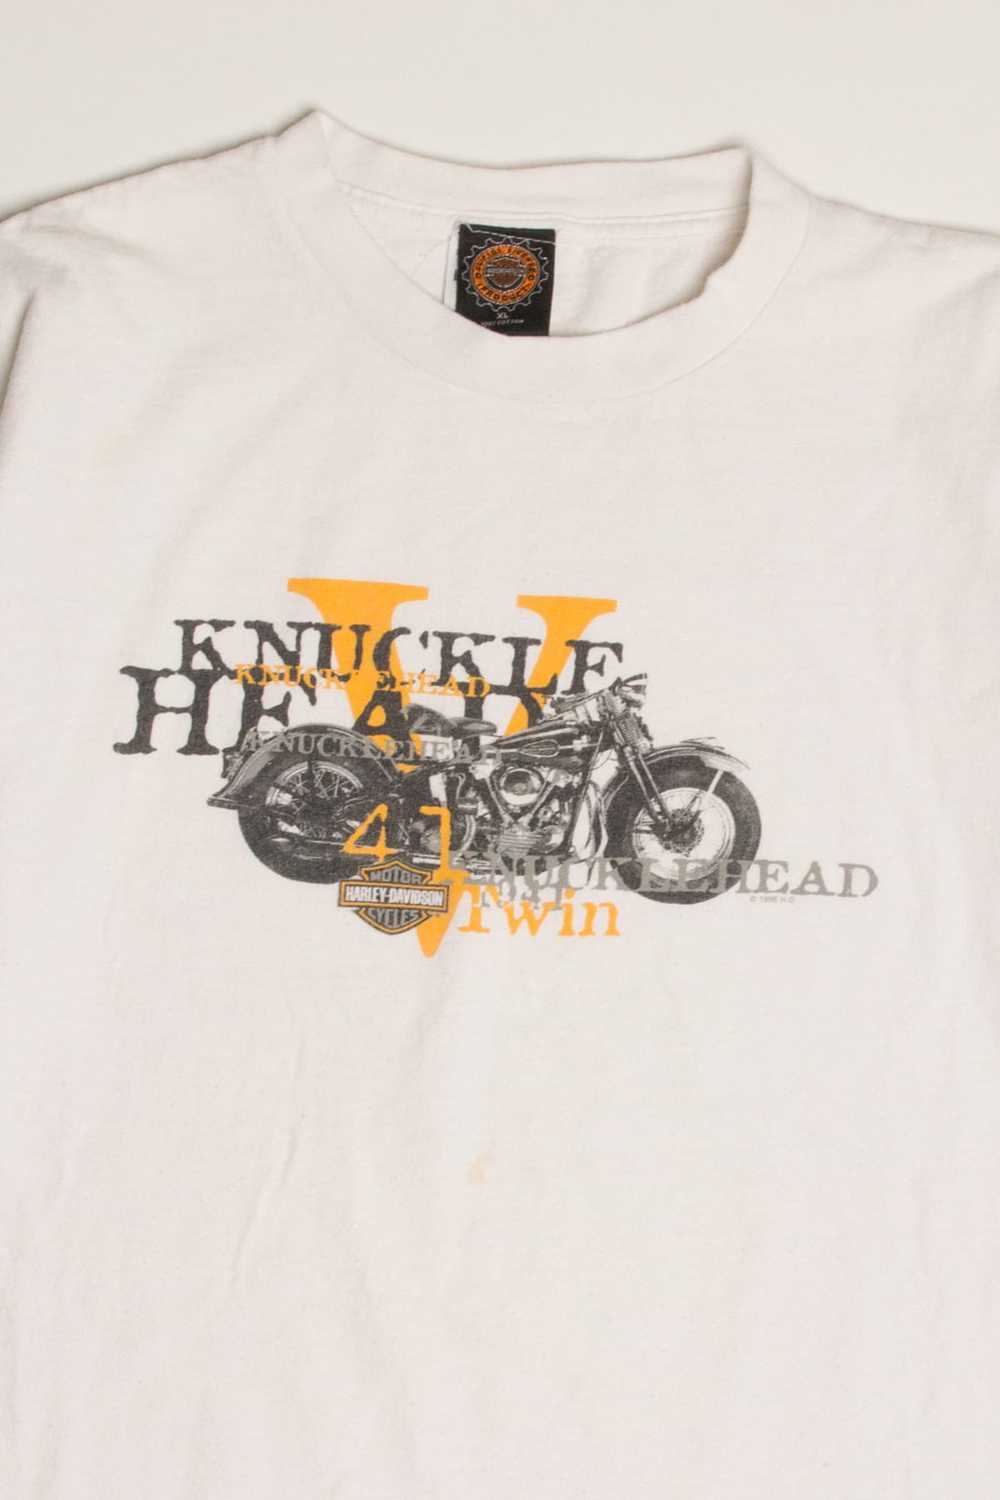 Knucklehead Harley-Davidson T-Shirt (1990s) - image 1